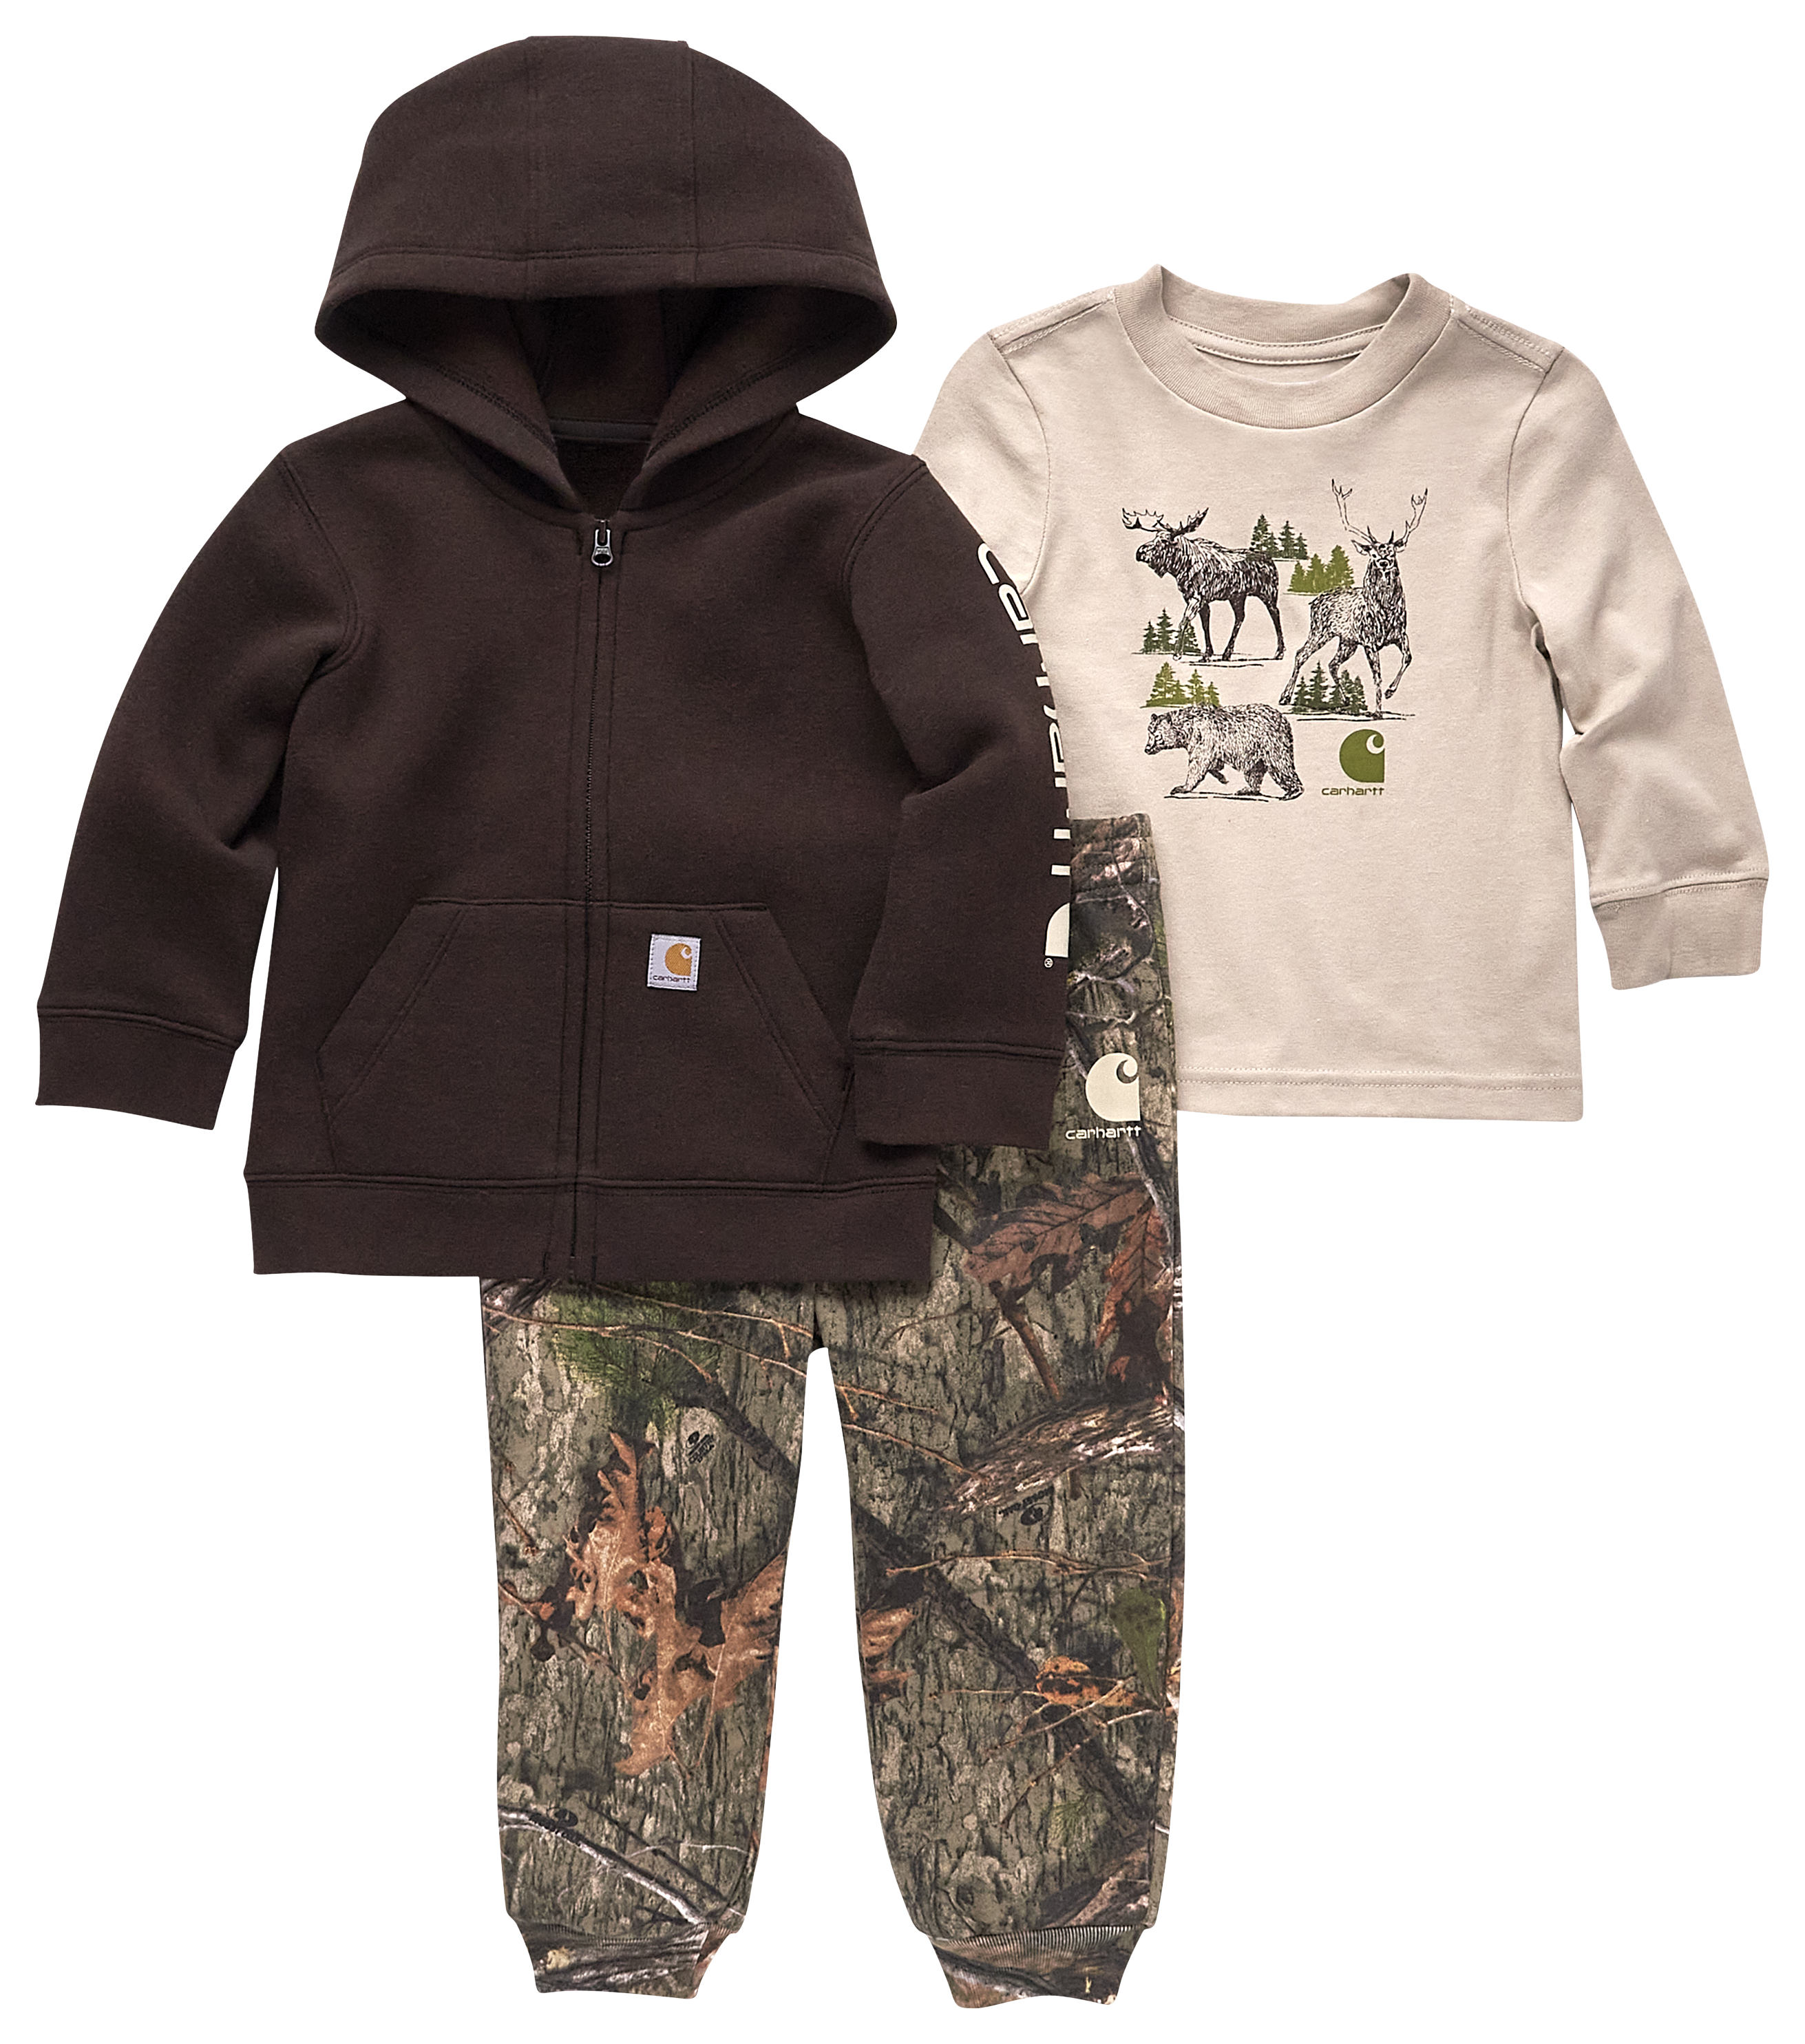 Carhartt Long-Sleeve T-Shirt, Jacket, and Fleece Pants 3-Piece Set for Babies - Mossy Oak Country DNA - 24 Months